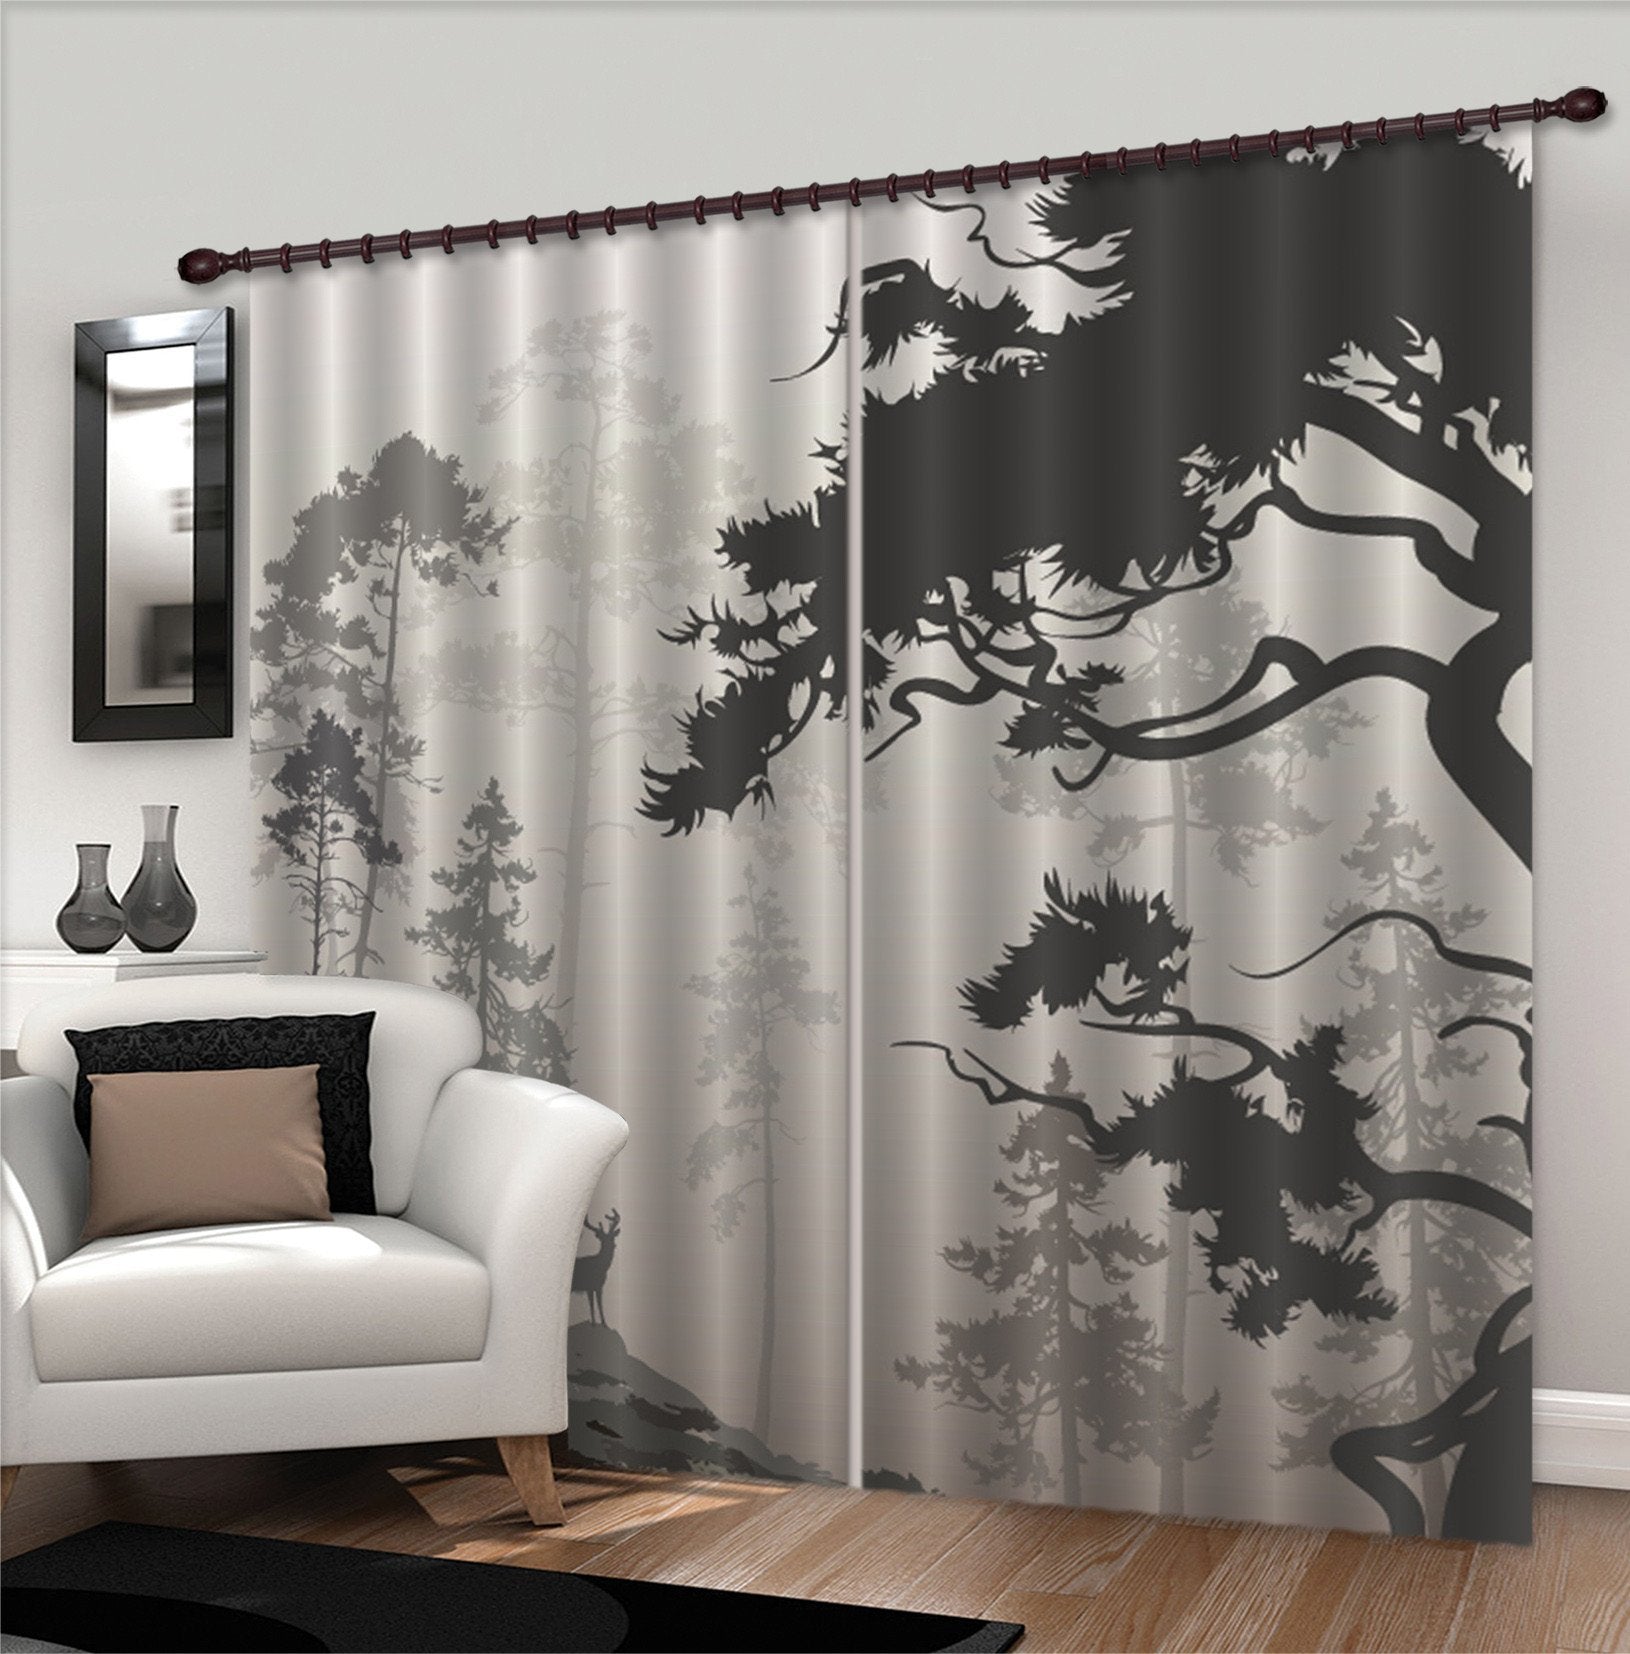 3D Misty Forest Animal 584 Curtains Drapes Wallpaper AJ Wallpaper 